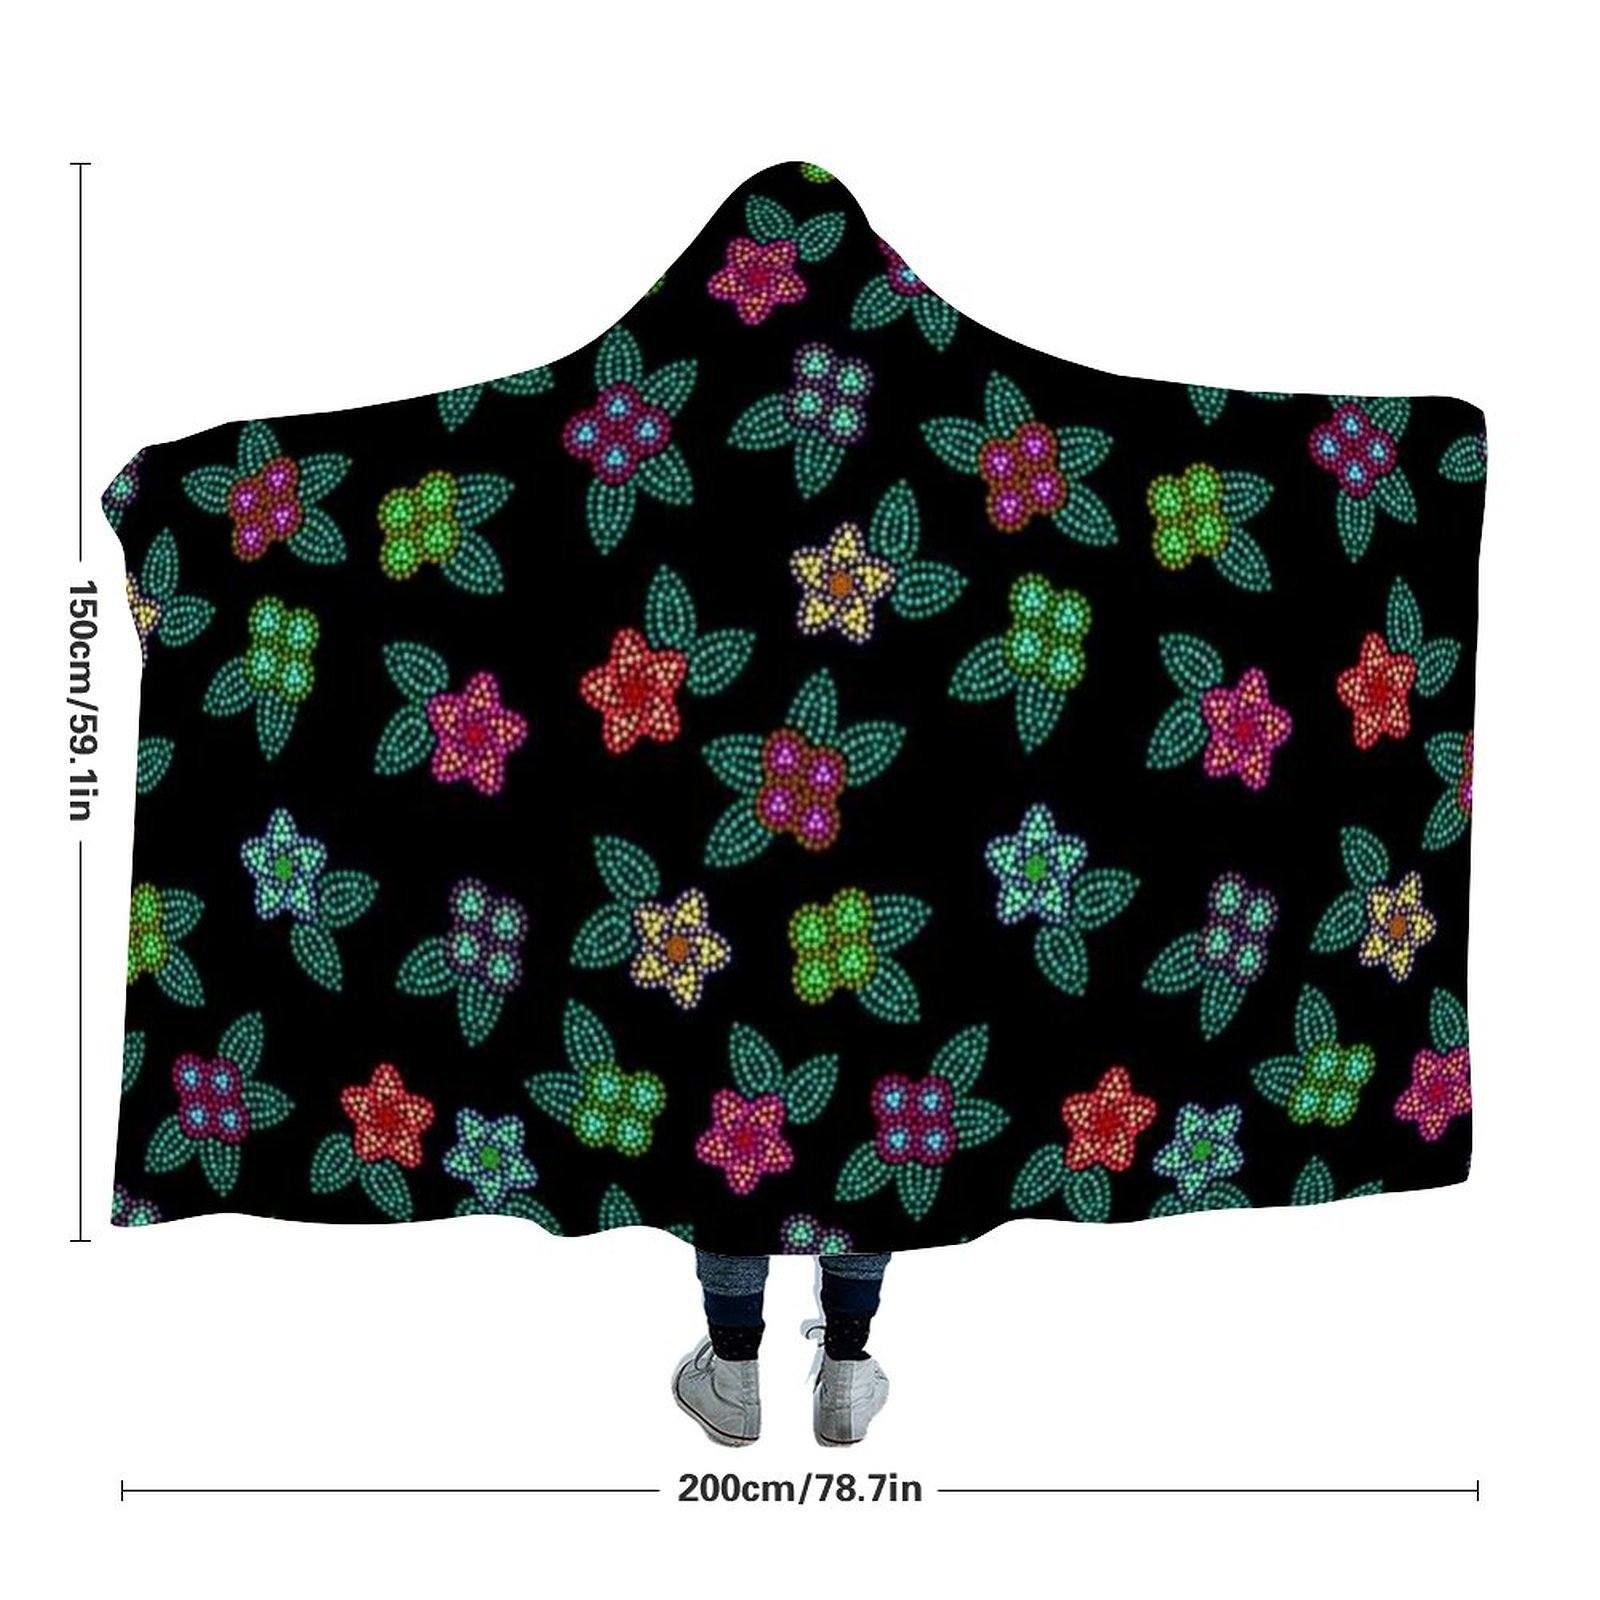 Berry Flowers Black Hooded Blanket 49 Dzine 